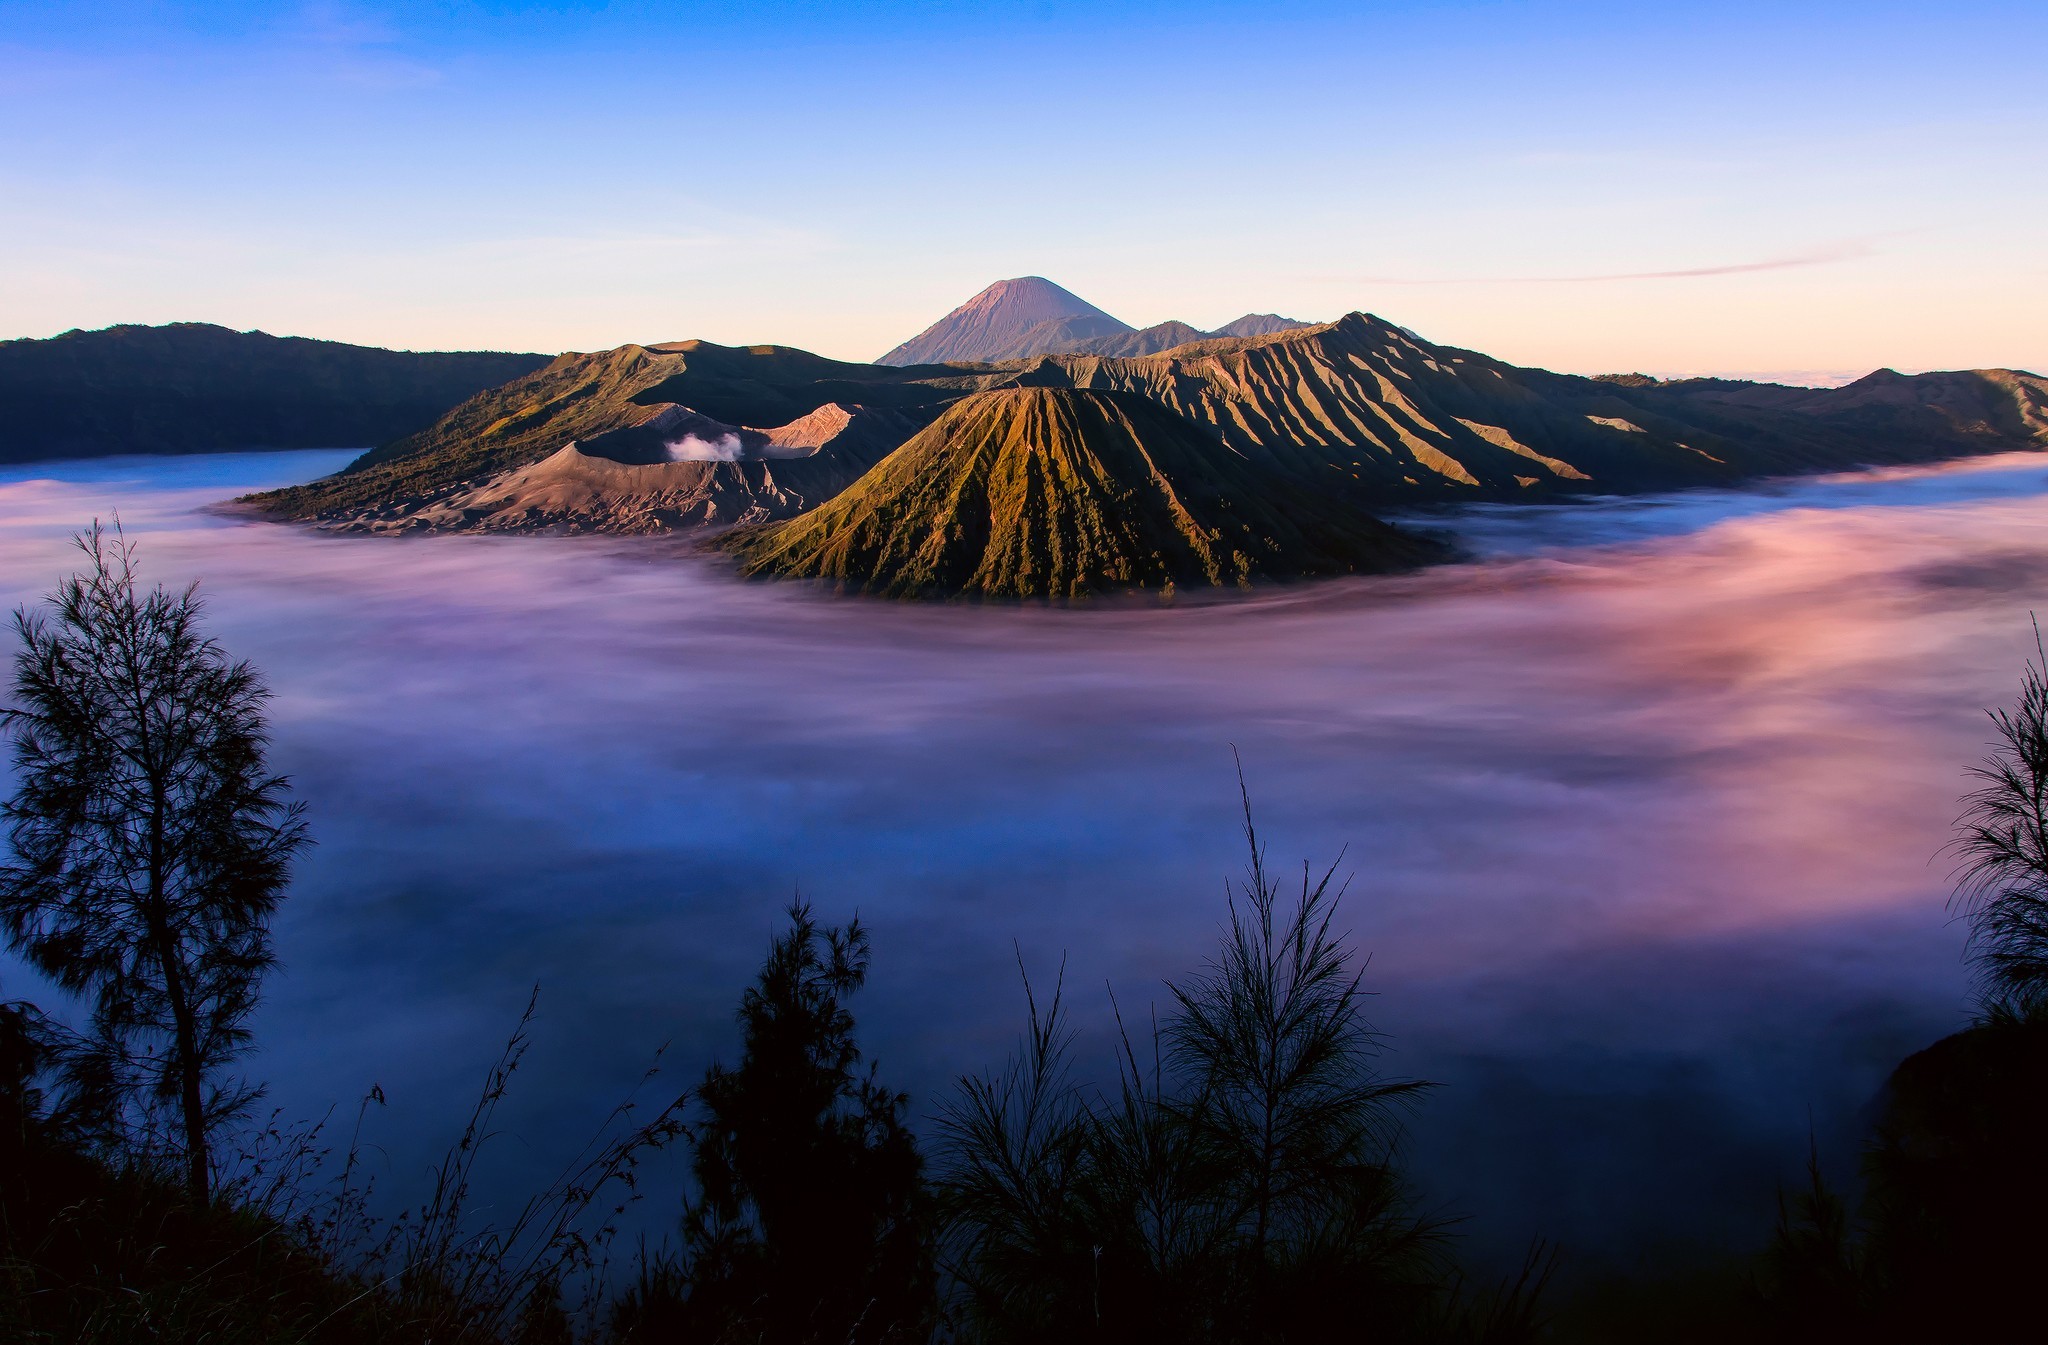 342746 Bild herunterladen erde/natur, berg bromo, indonesien, java (indonesien), vulkan, vulkane - Hintergrundbilder und Bildschirmschoner kostenlos